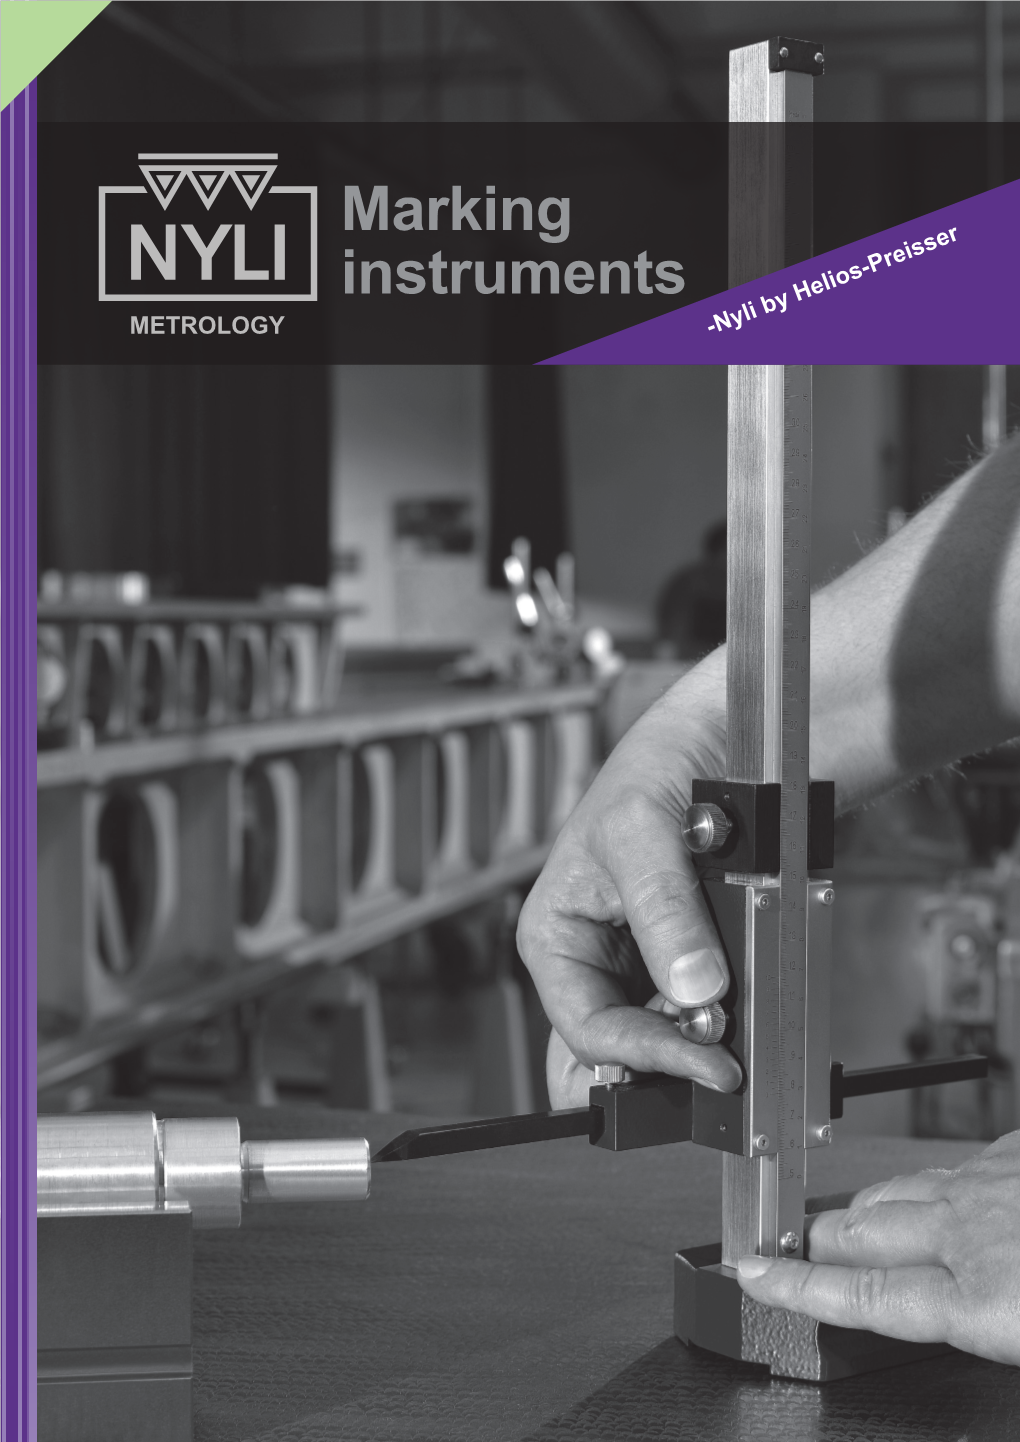 Marking Instruments -Nyli by Helios-Preisser Nyli Metrology AB